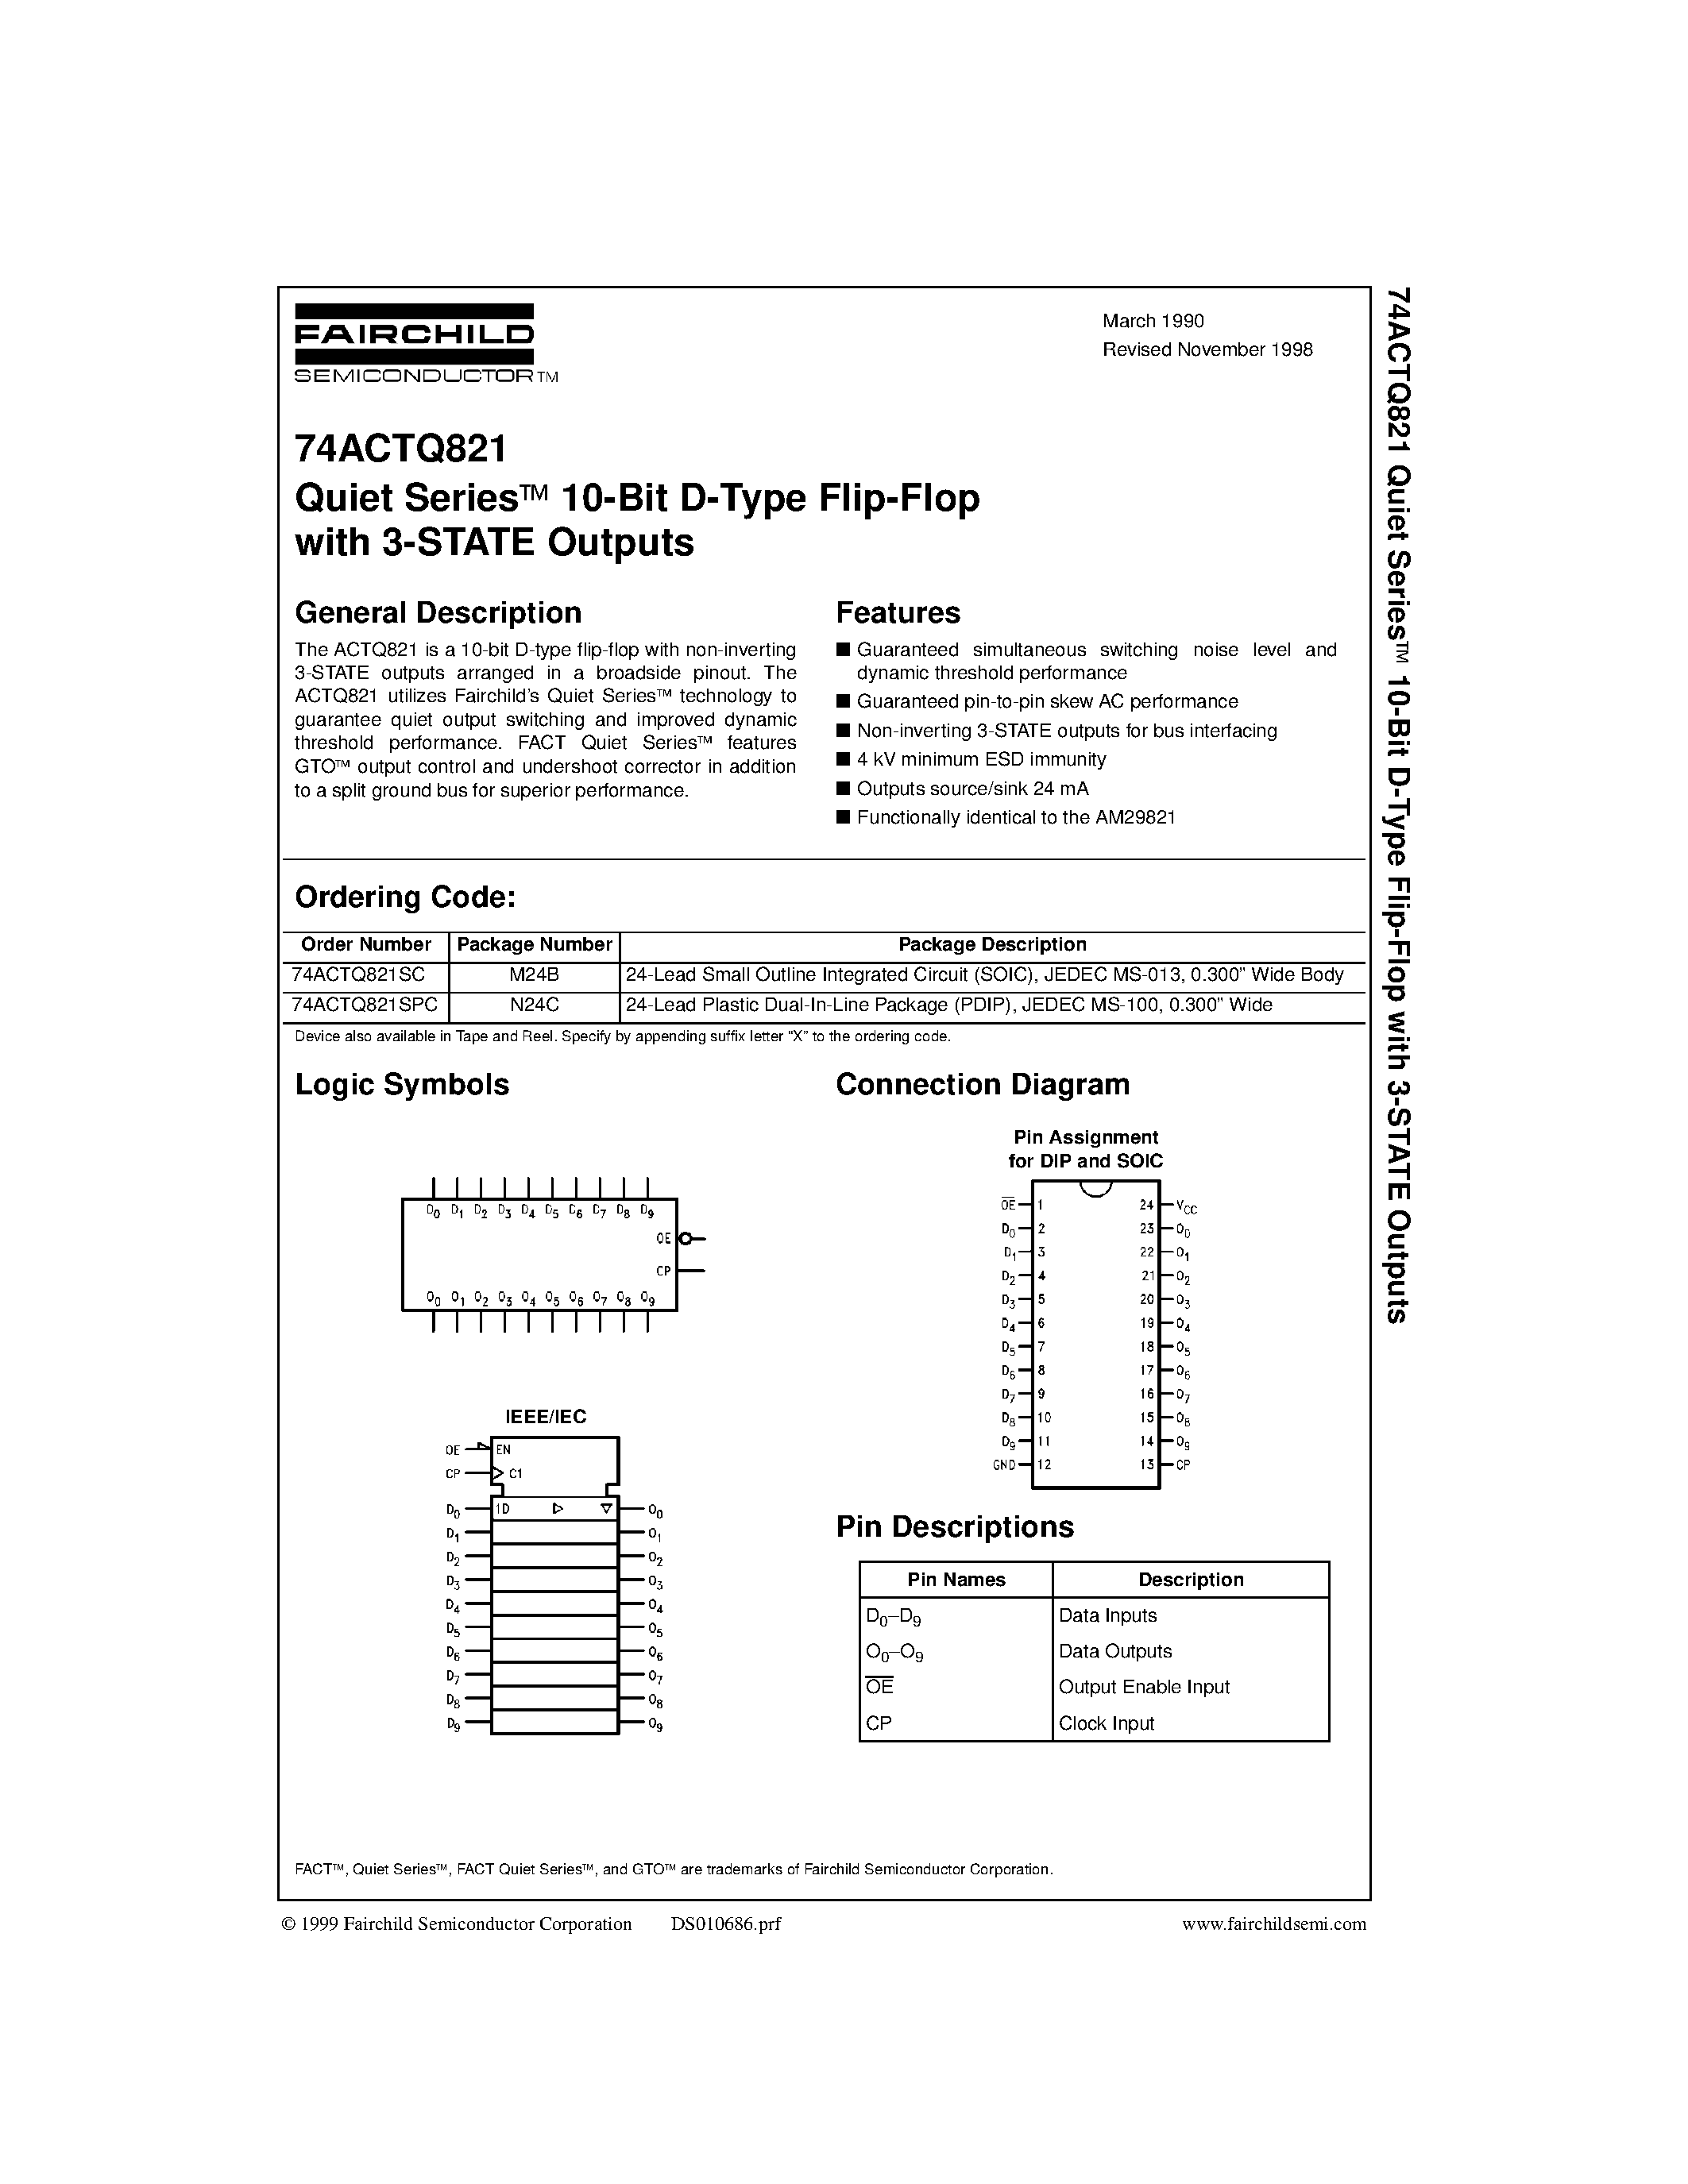 Даташит 74ACTQ821SC - Quiet Seriesa 10-Bit D-Type Flip-Flop with 3-STATE Outputs страница 1